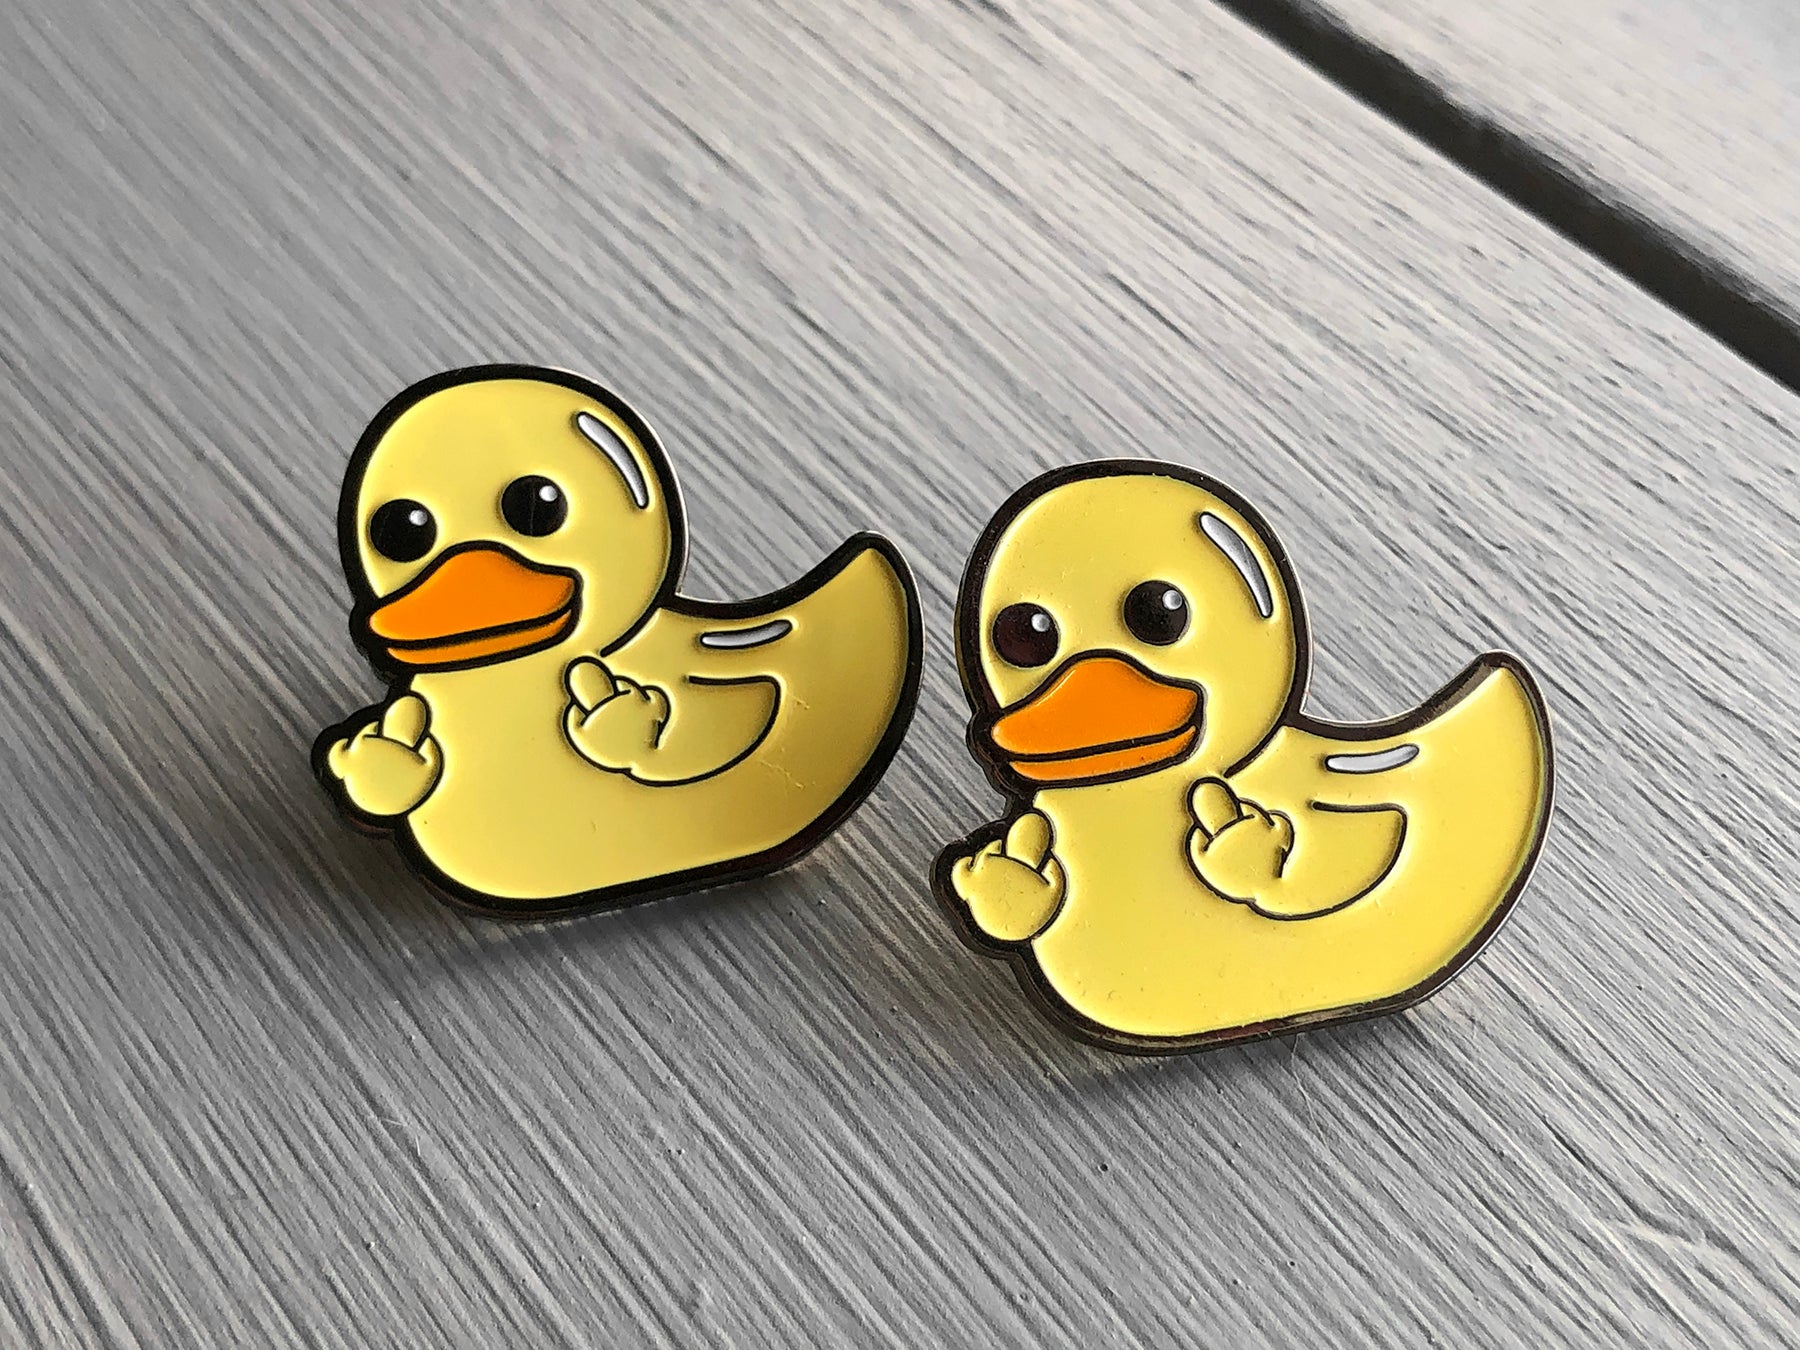 Zero Ducks Given Enamel Pin